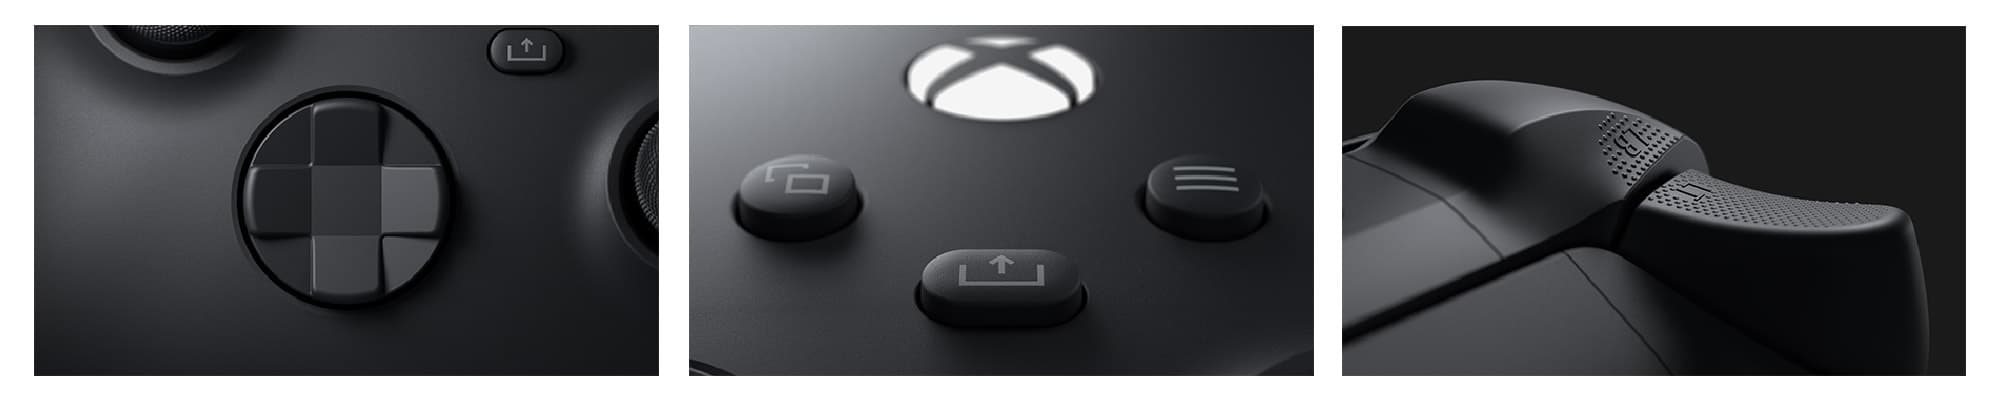 Xbox Serie X Joystick